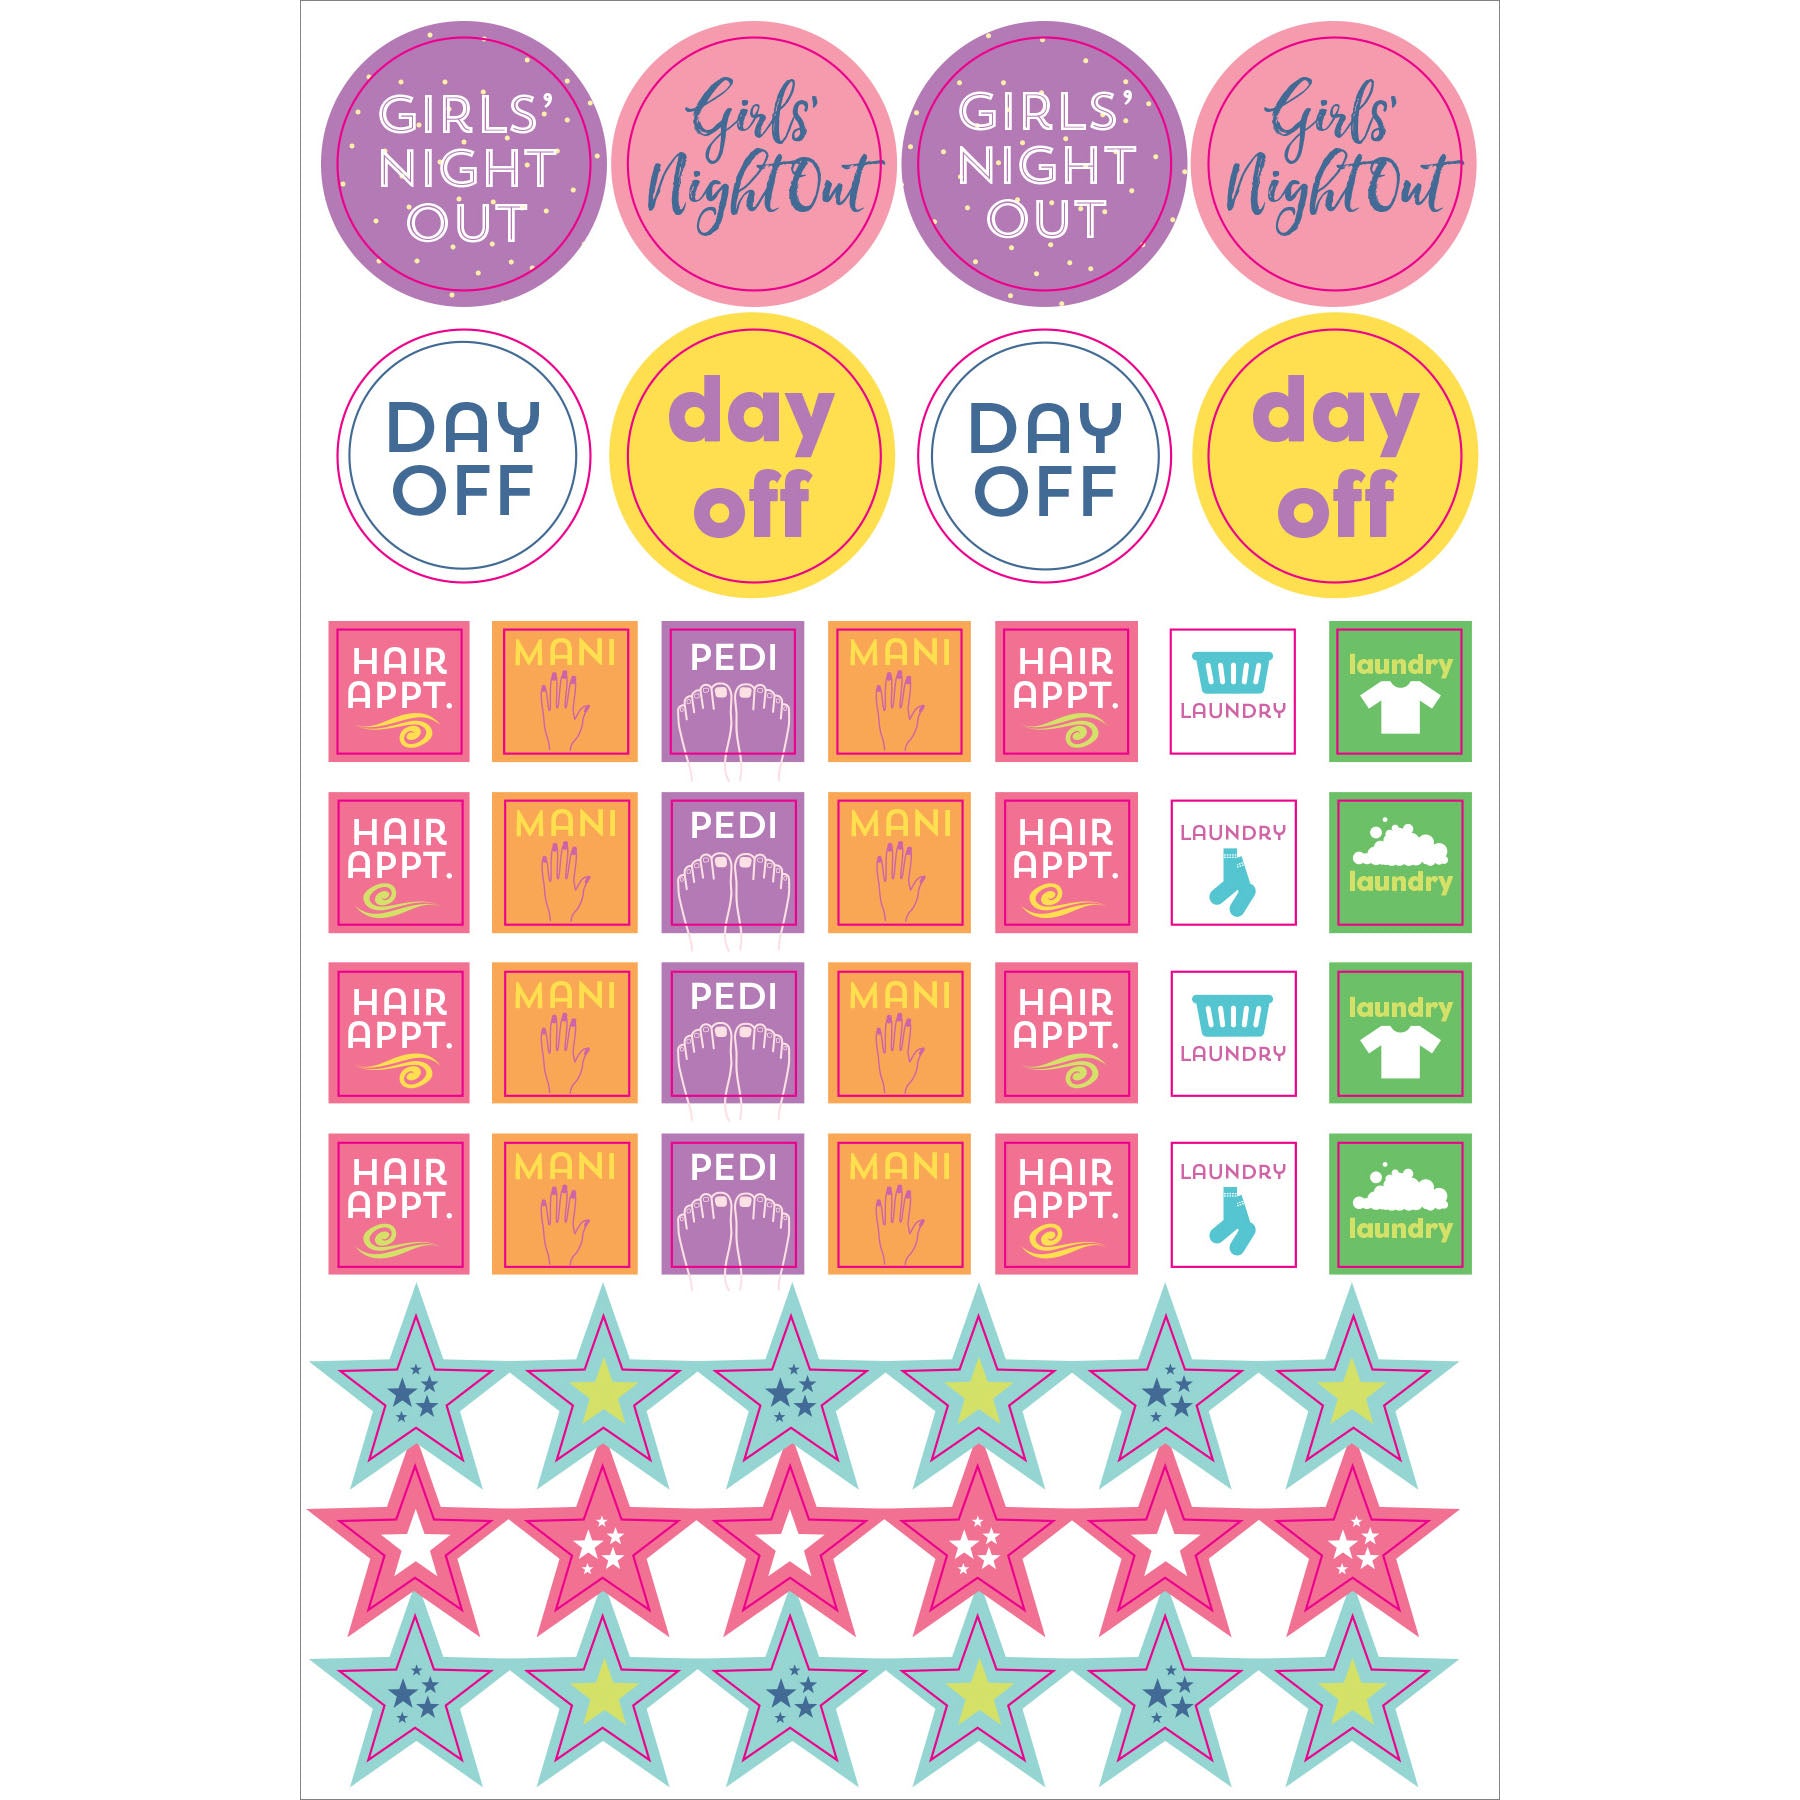 Weekly Planner Stickers - 12 sheets - Paper Kooka